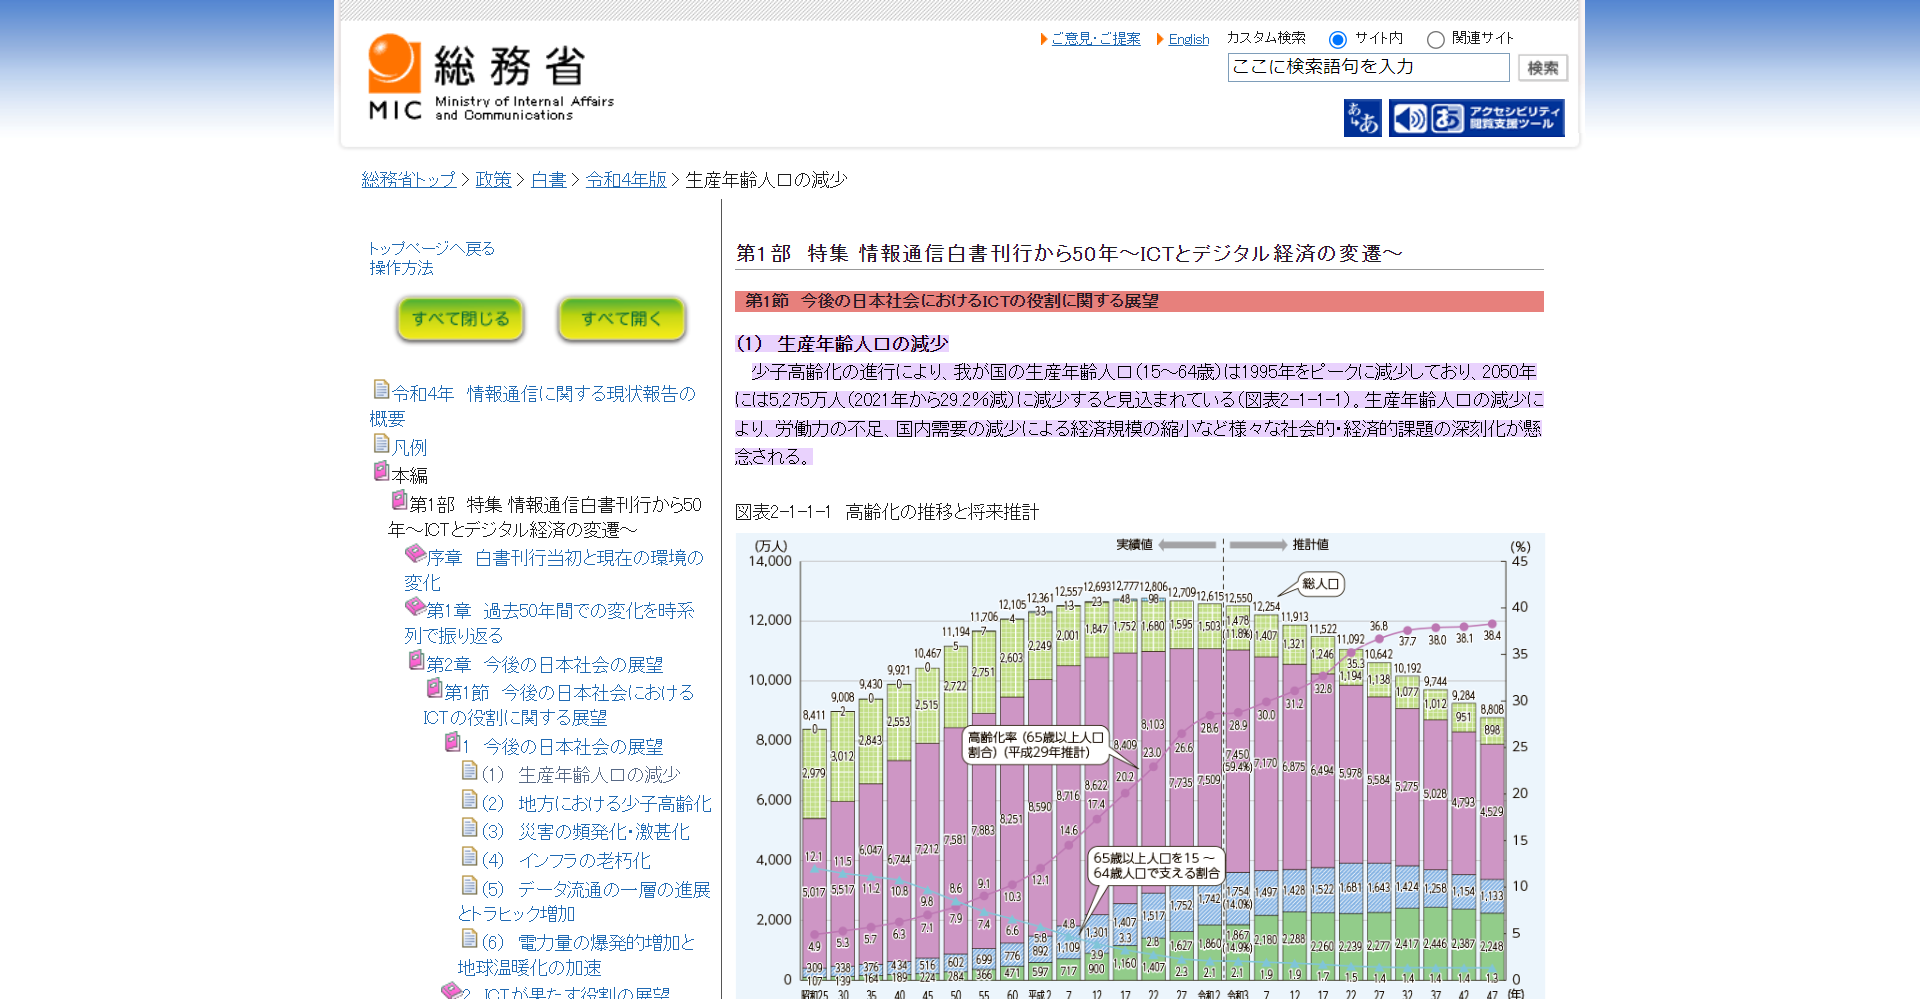 FireShot Capture 005 - 総務省｜令和4年版 情報通信白書｜生産年齢人口の減少 - www.soumu.go.jp.png